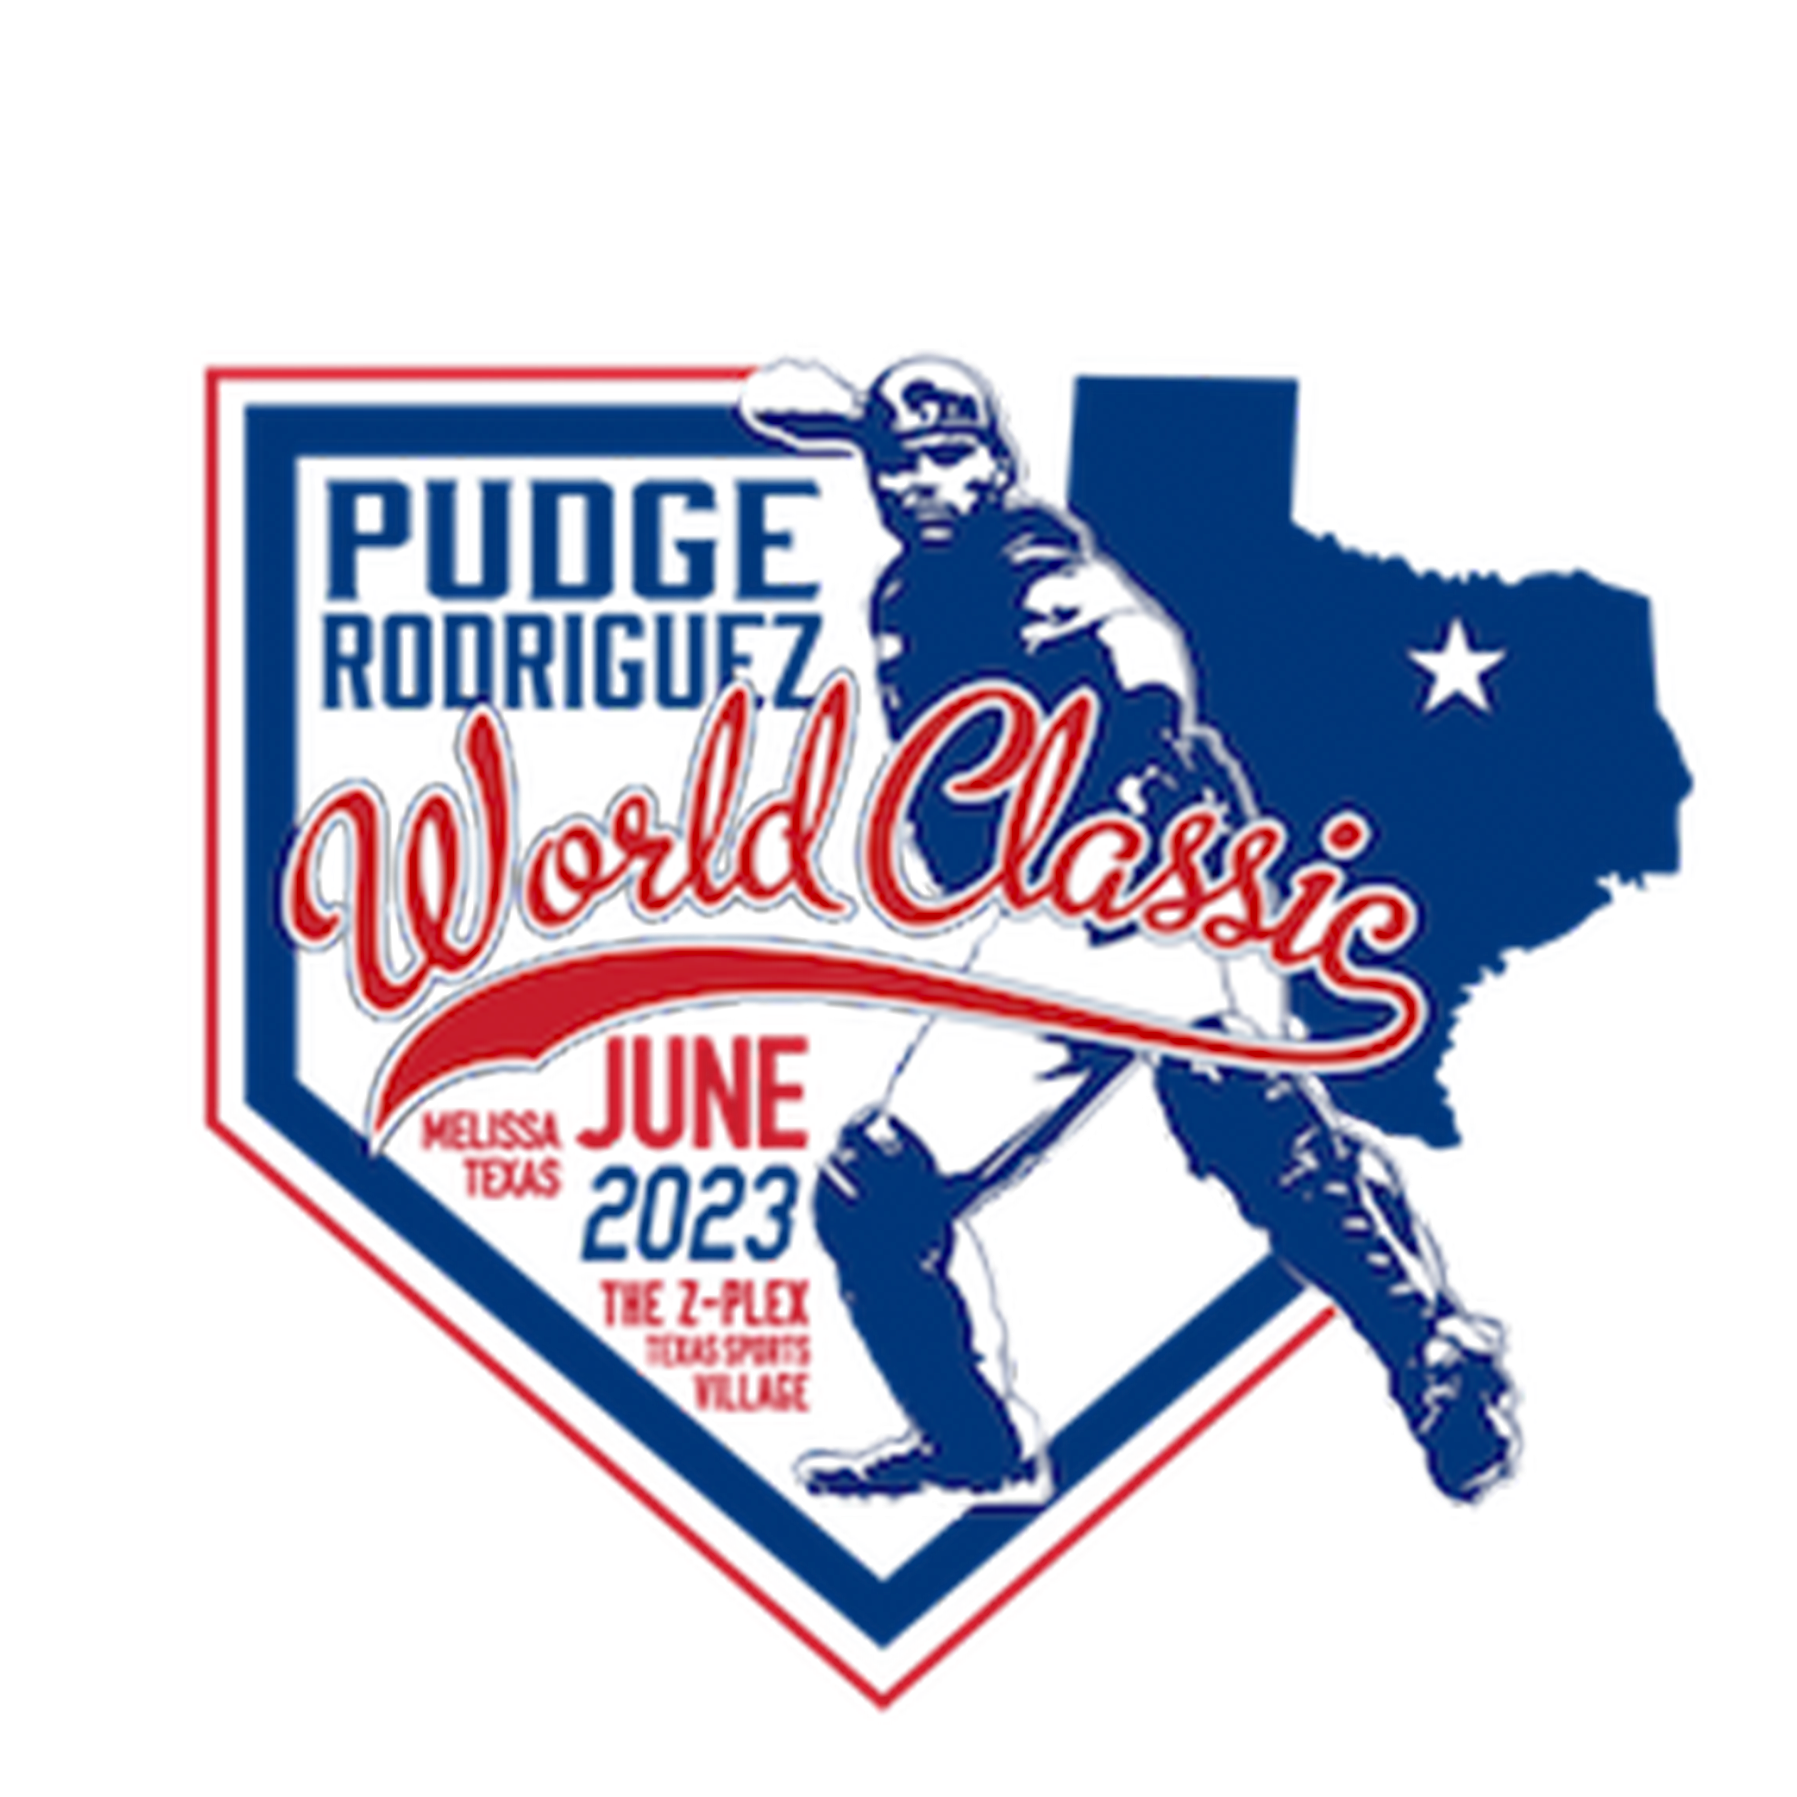 2023 Pudge Rodriguez World Classic, Melissa, Texas